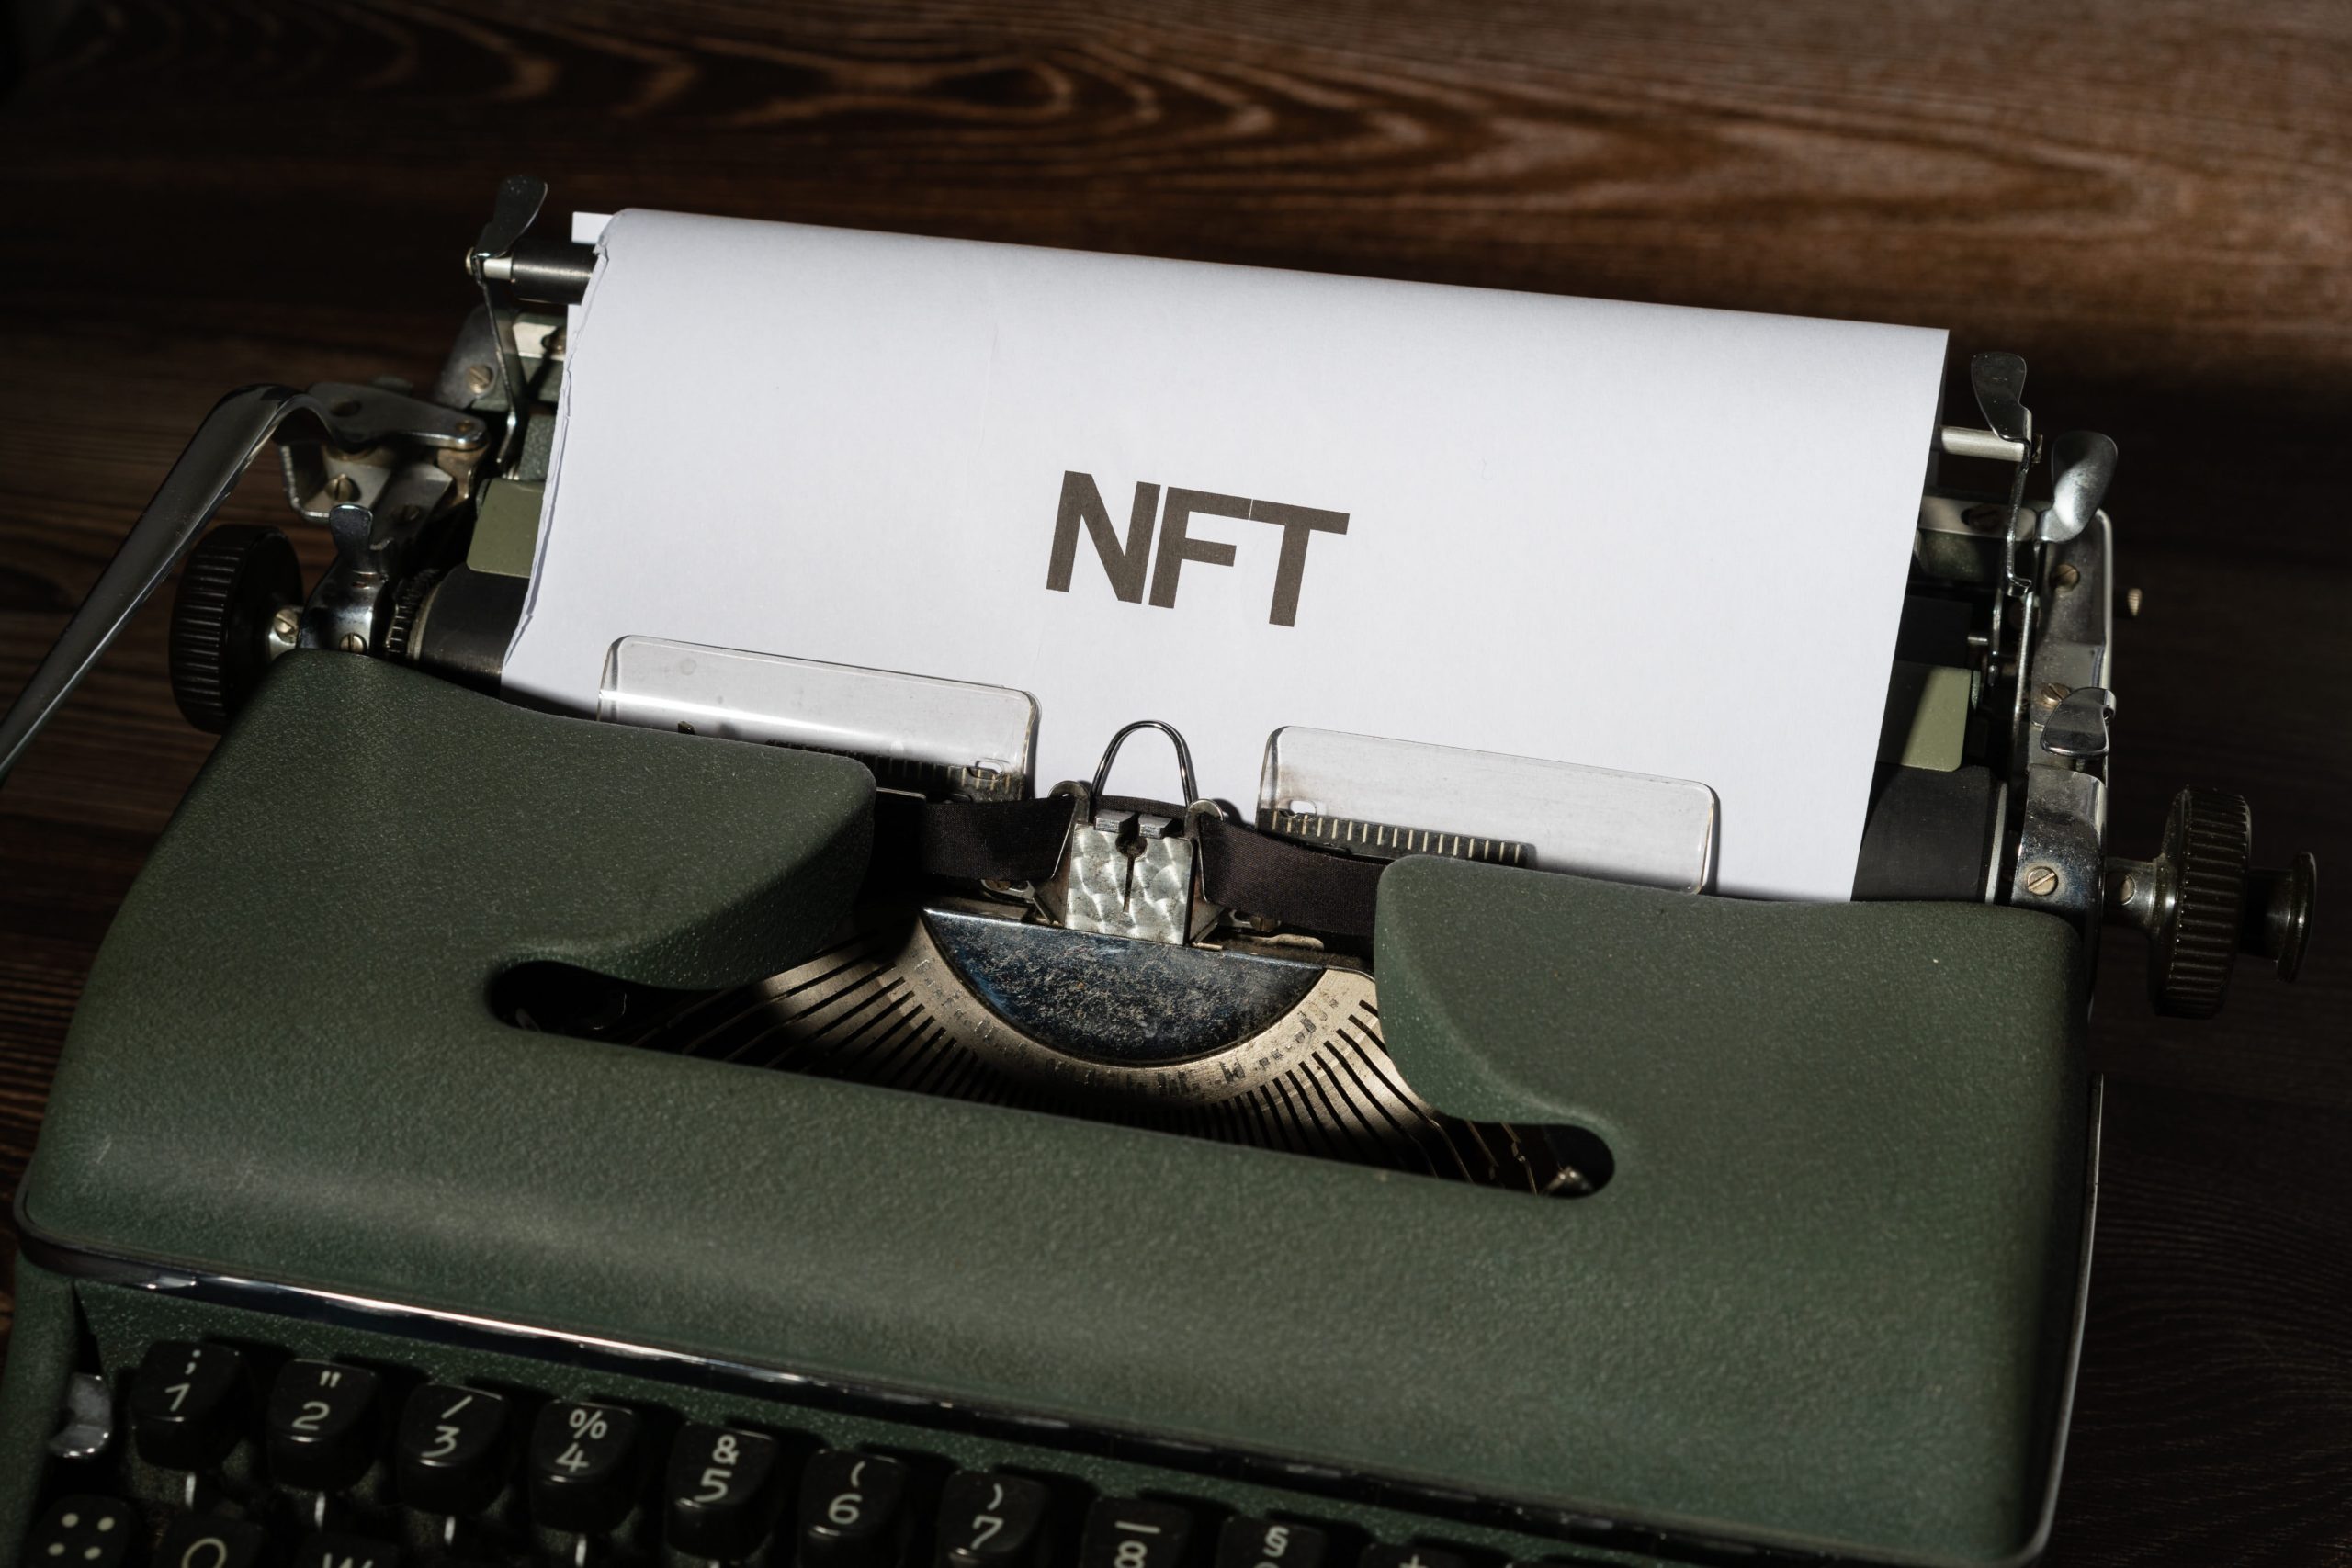 nft on a green typewriter